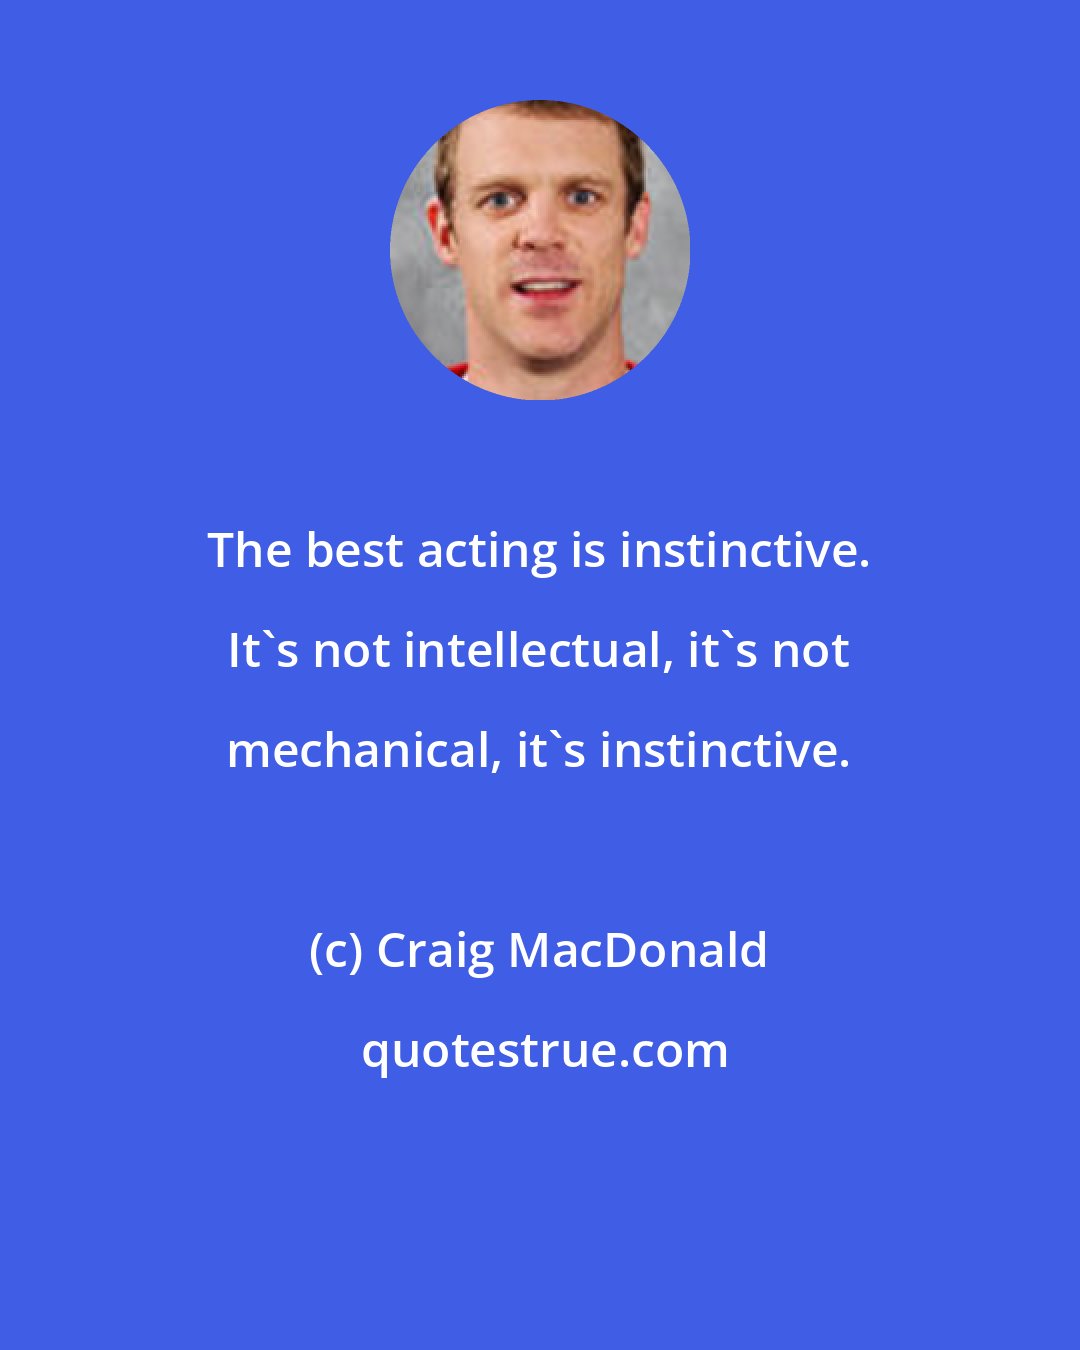 Craig MacDonald: The best acting is instinctive. It's not intellectual, it's not mechanical, it's instinctive.